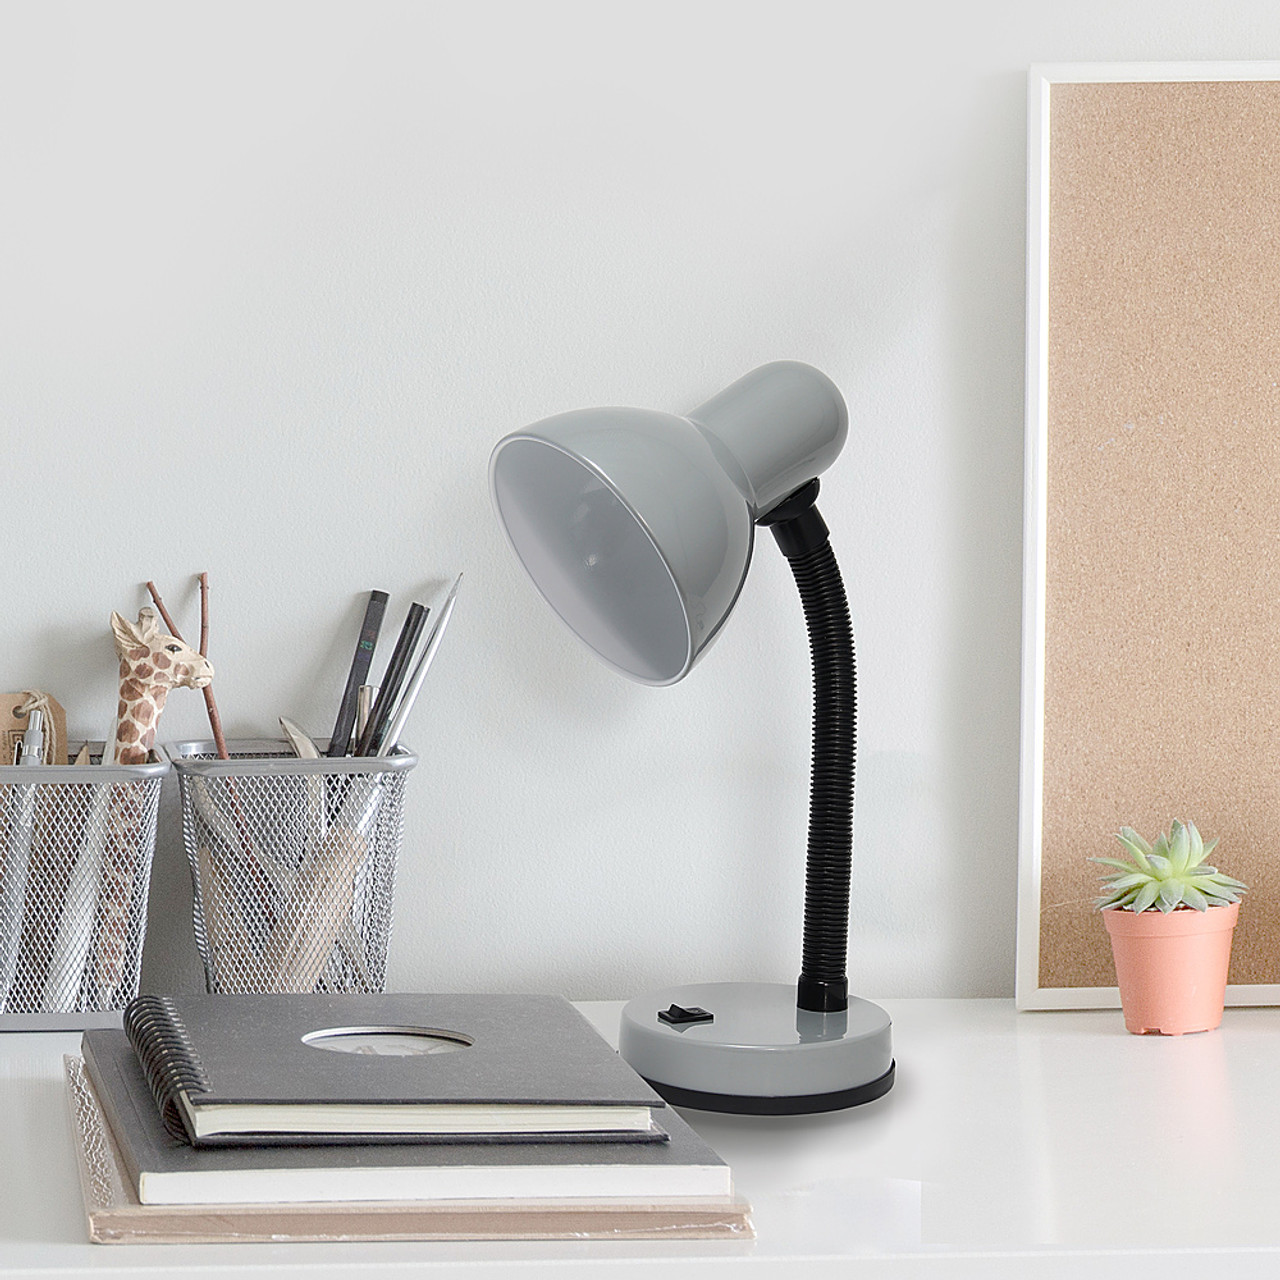 Simple Designs Basic Metal Desk Lamp with Flexible Hose Neck